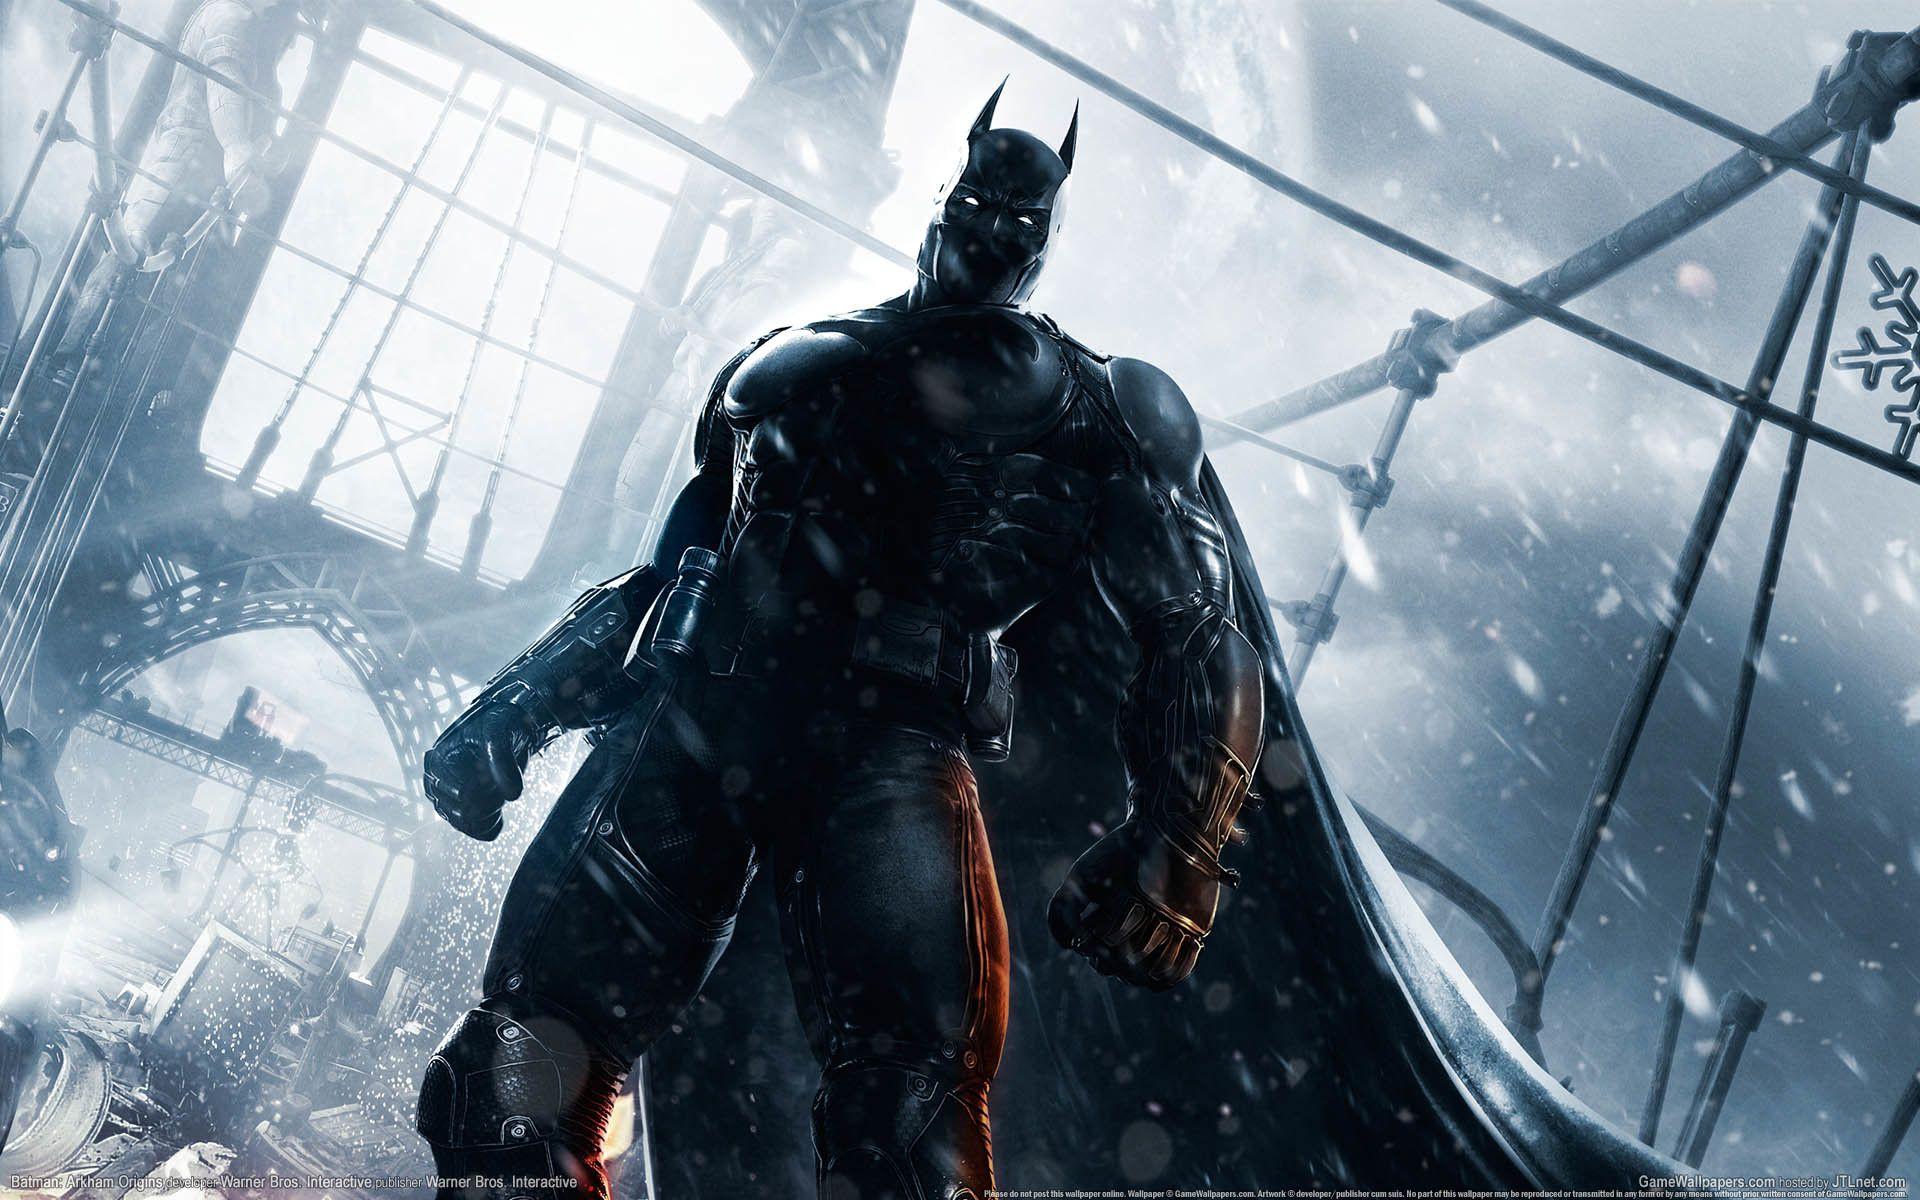 Batman: Arkham Origins Blackgate HD Wallpaper and Background Image